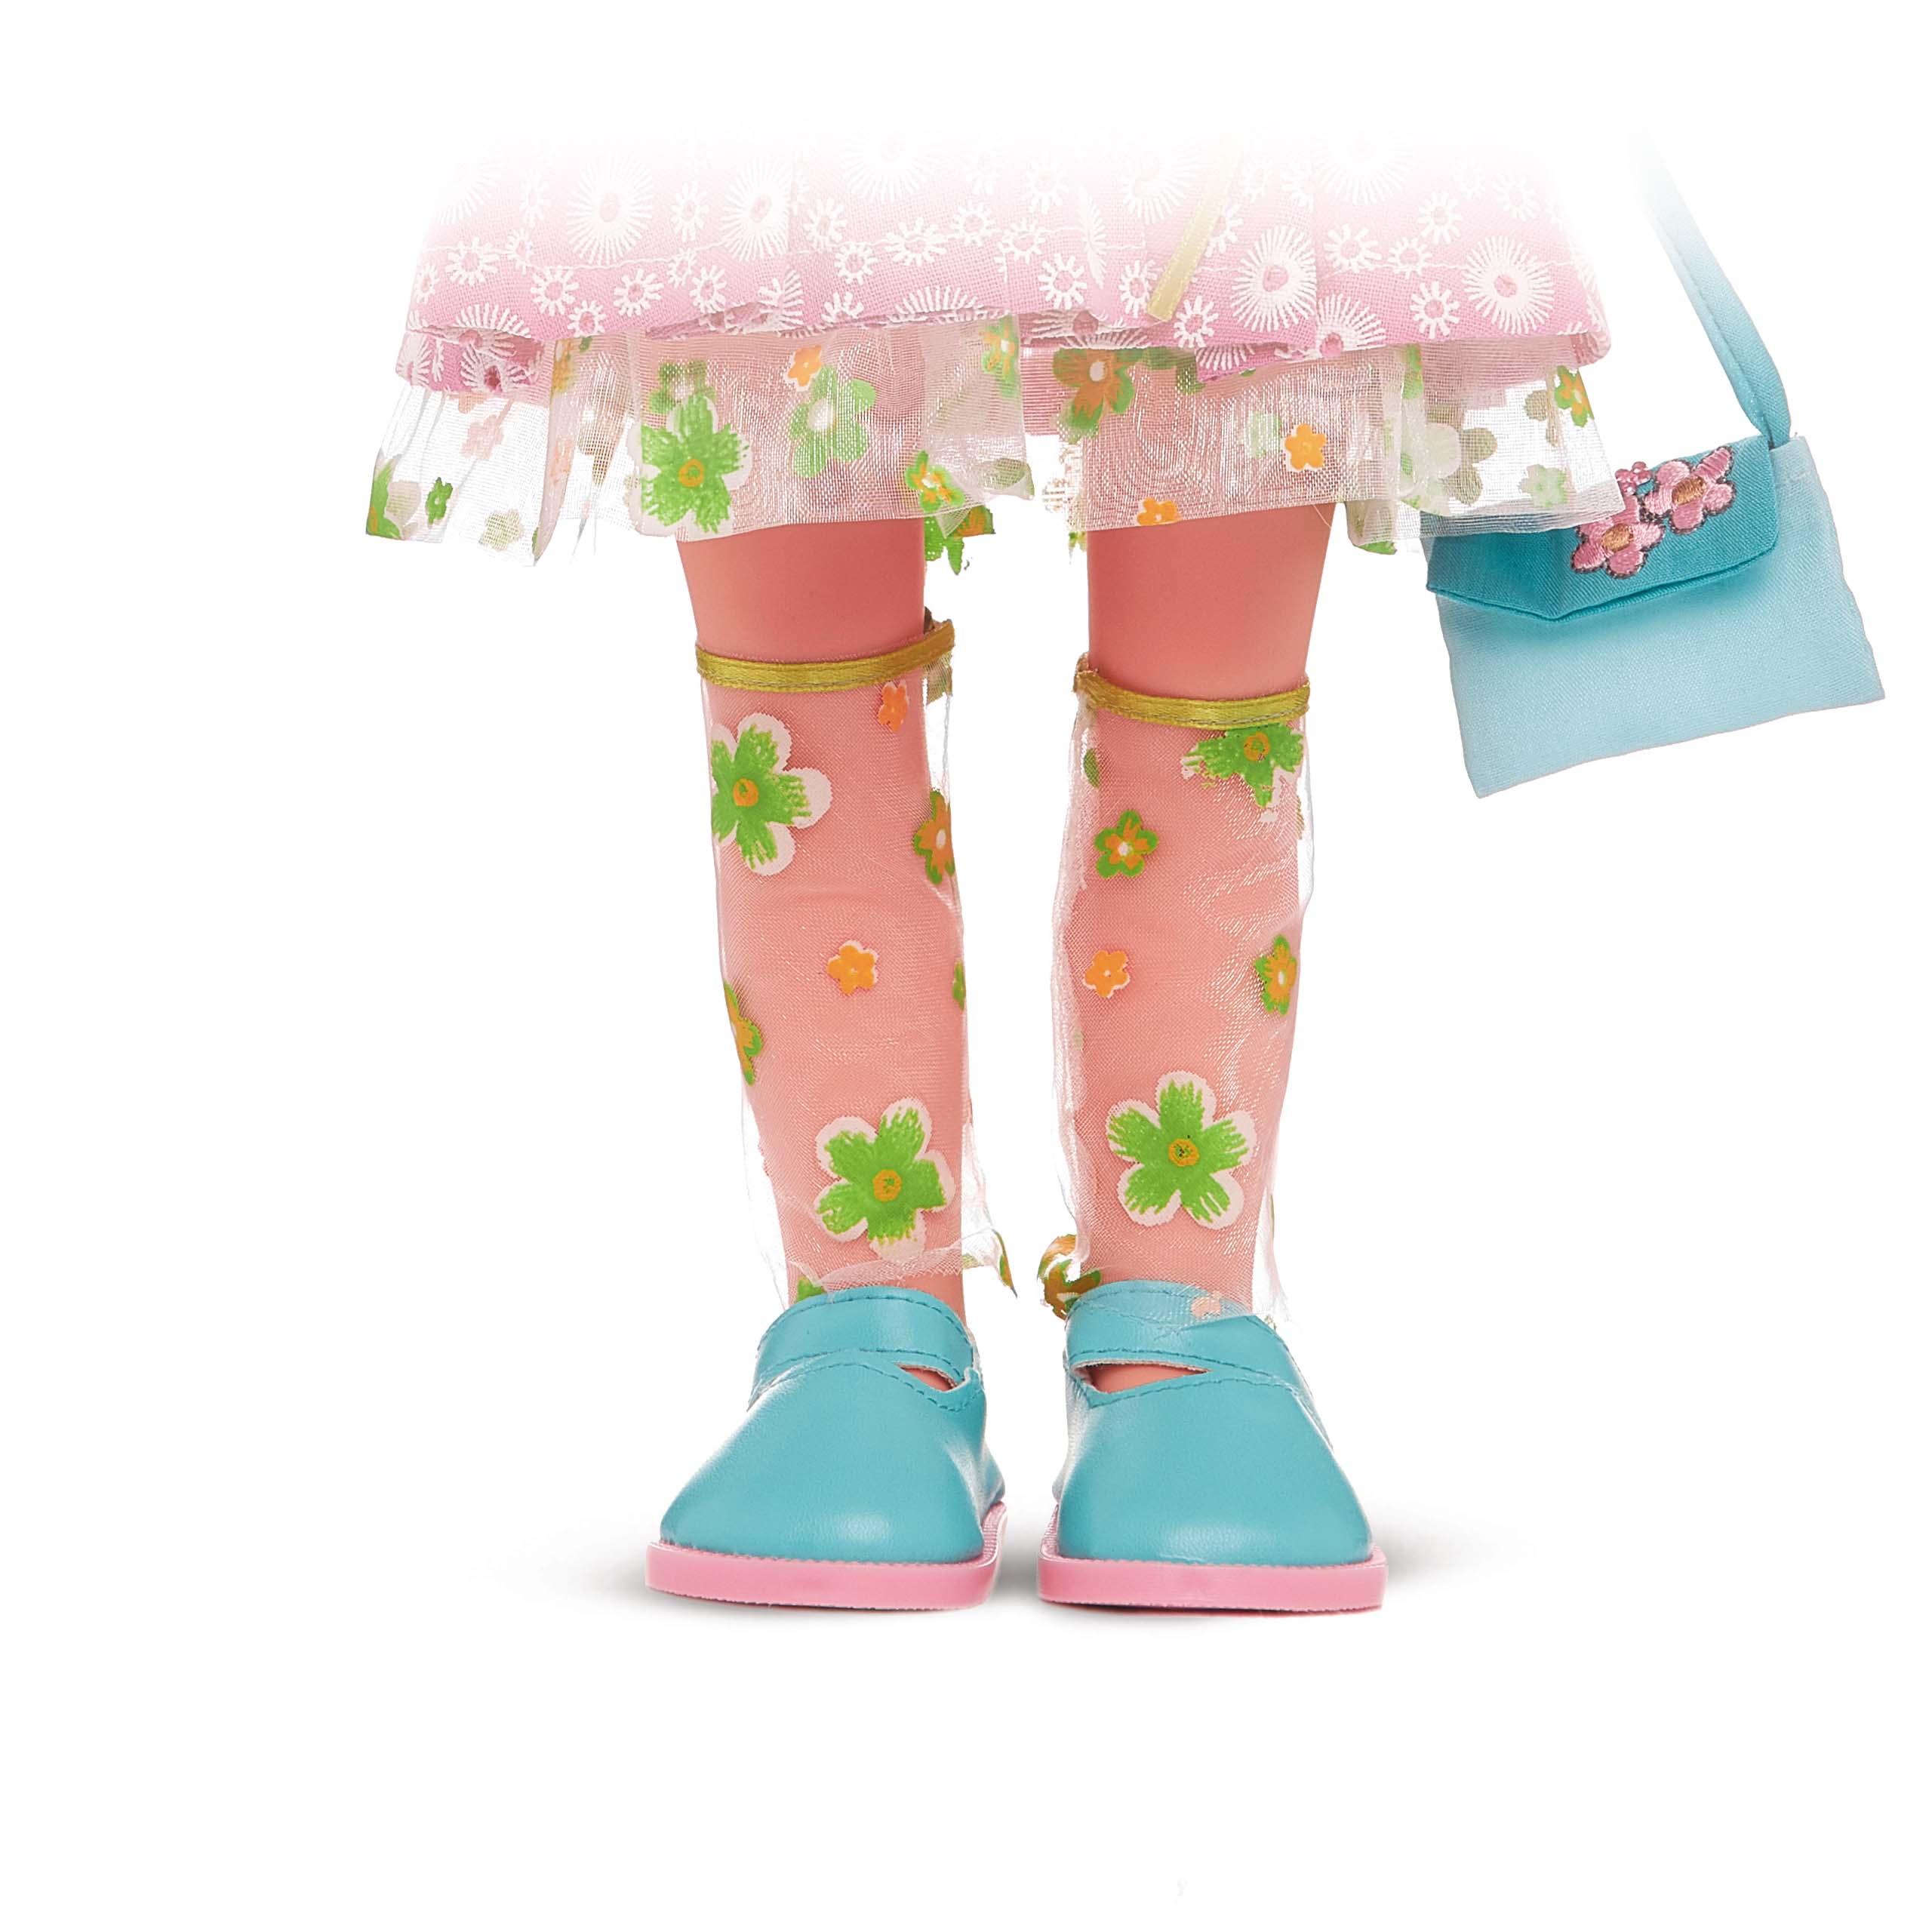 Beauty Star Flowery Spring Sunny Girl. Dolls – Where Fashion, Fun Spark Creativity!